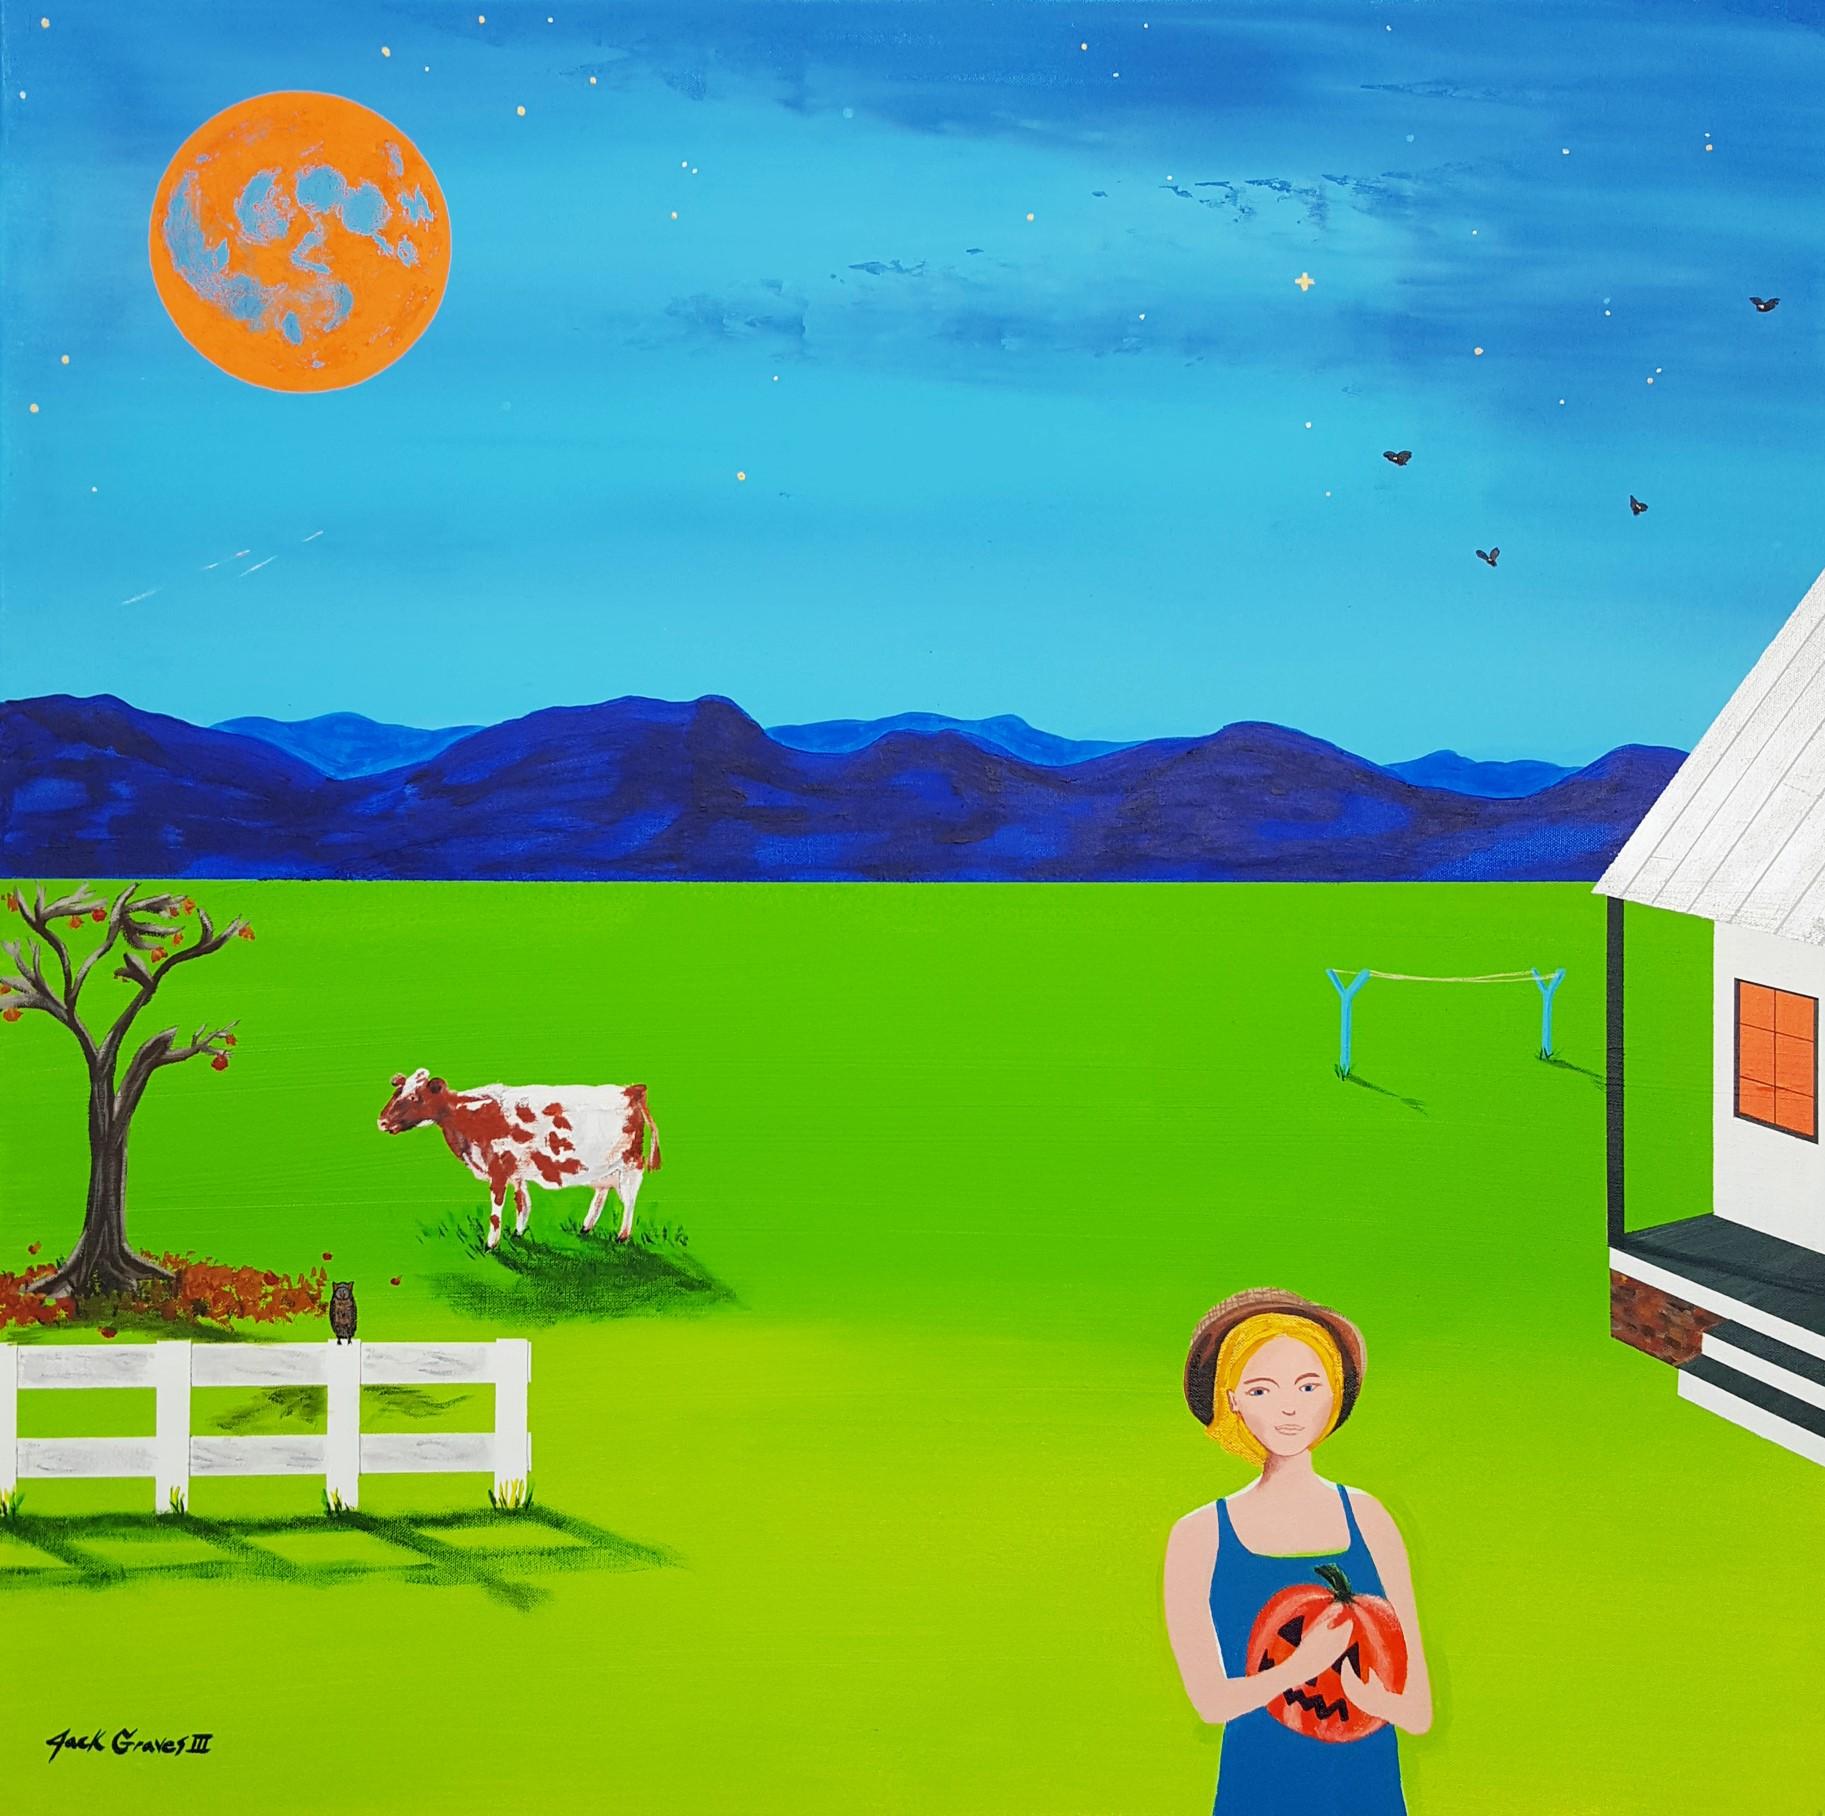 Full moon - Jack-o-Lantern /// Contemporary Landscape Farm Barn Girl Mountains